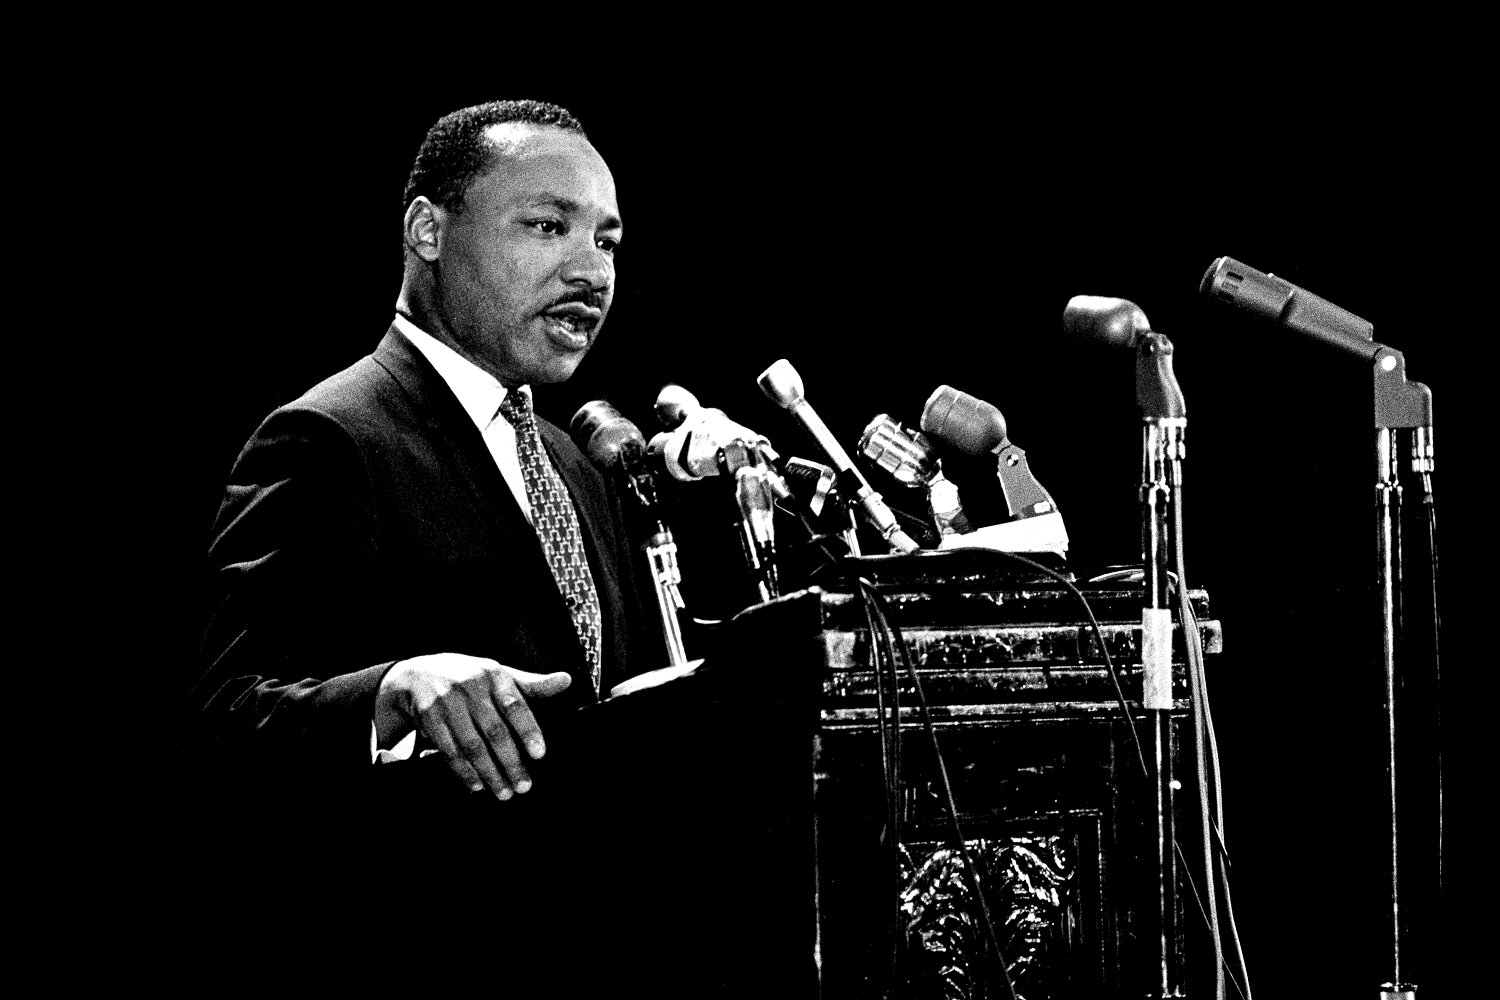  Martin Luther King Jr. speaking in Stanford’s Memorial Auditorium in 1967. Credit: Stanford University. 